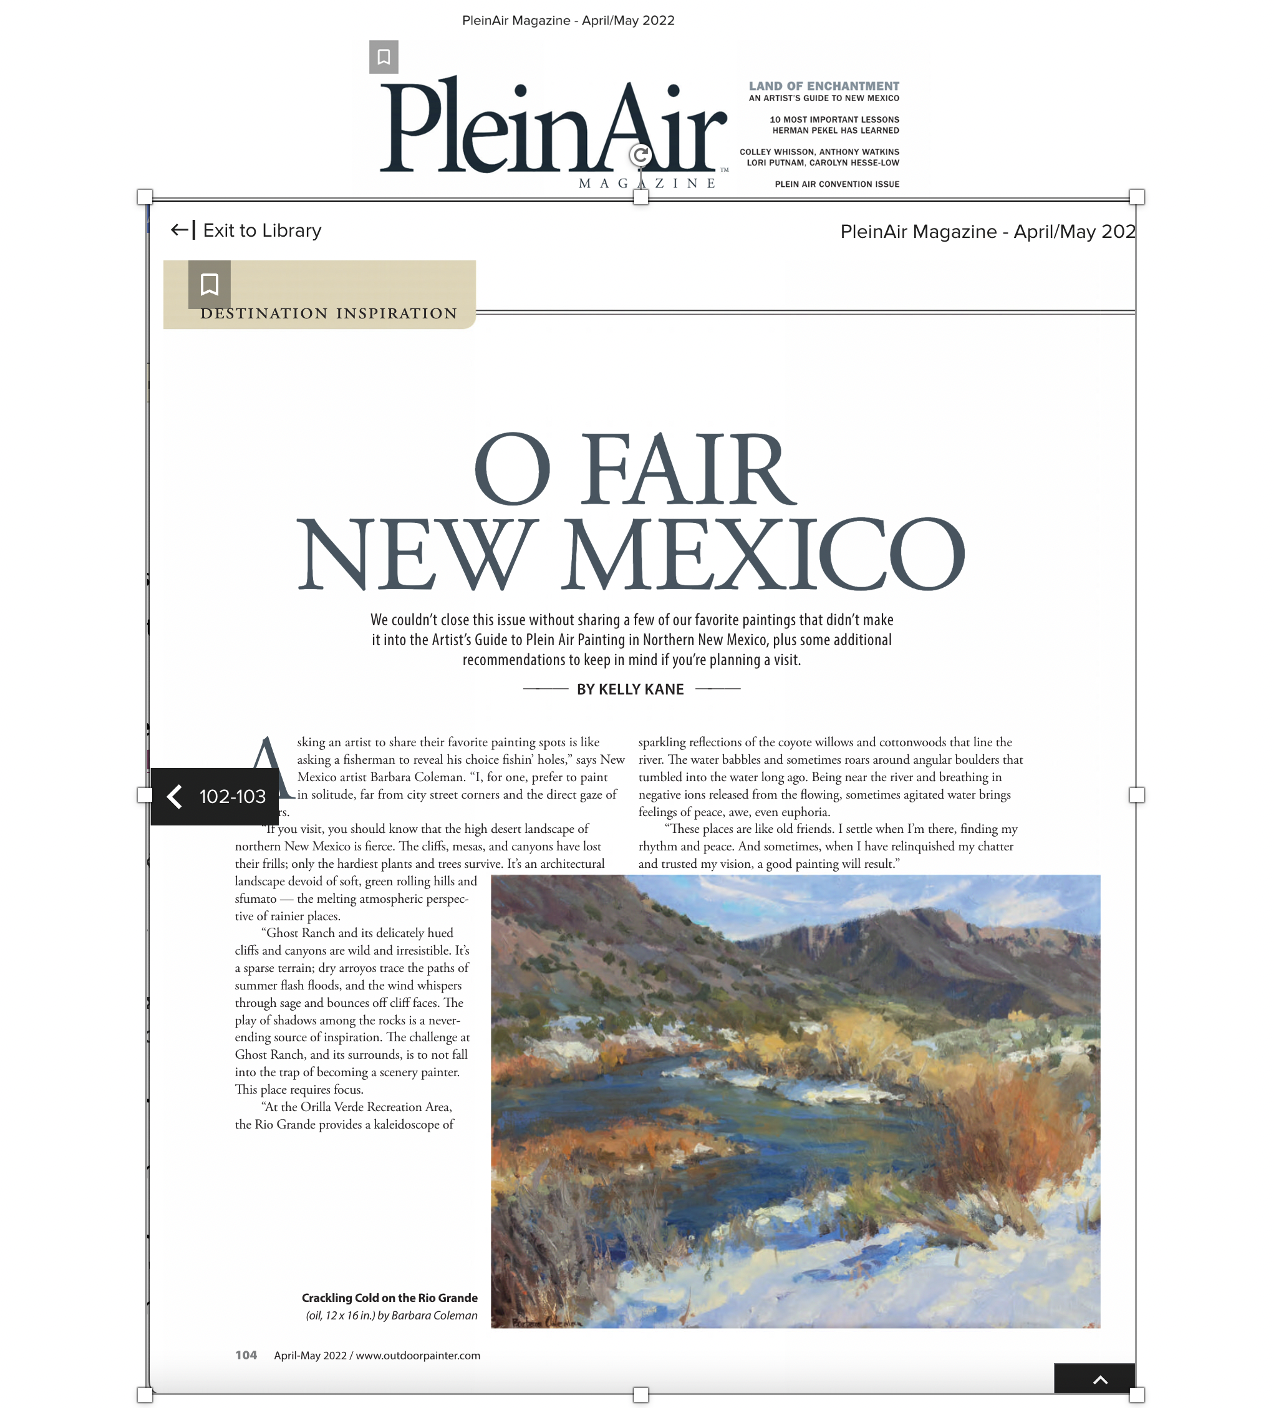 Plein Air Magazine, April/May 2022